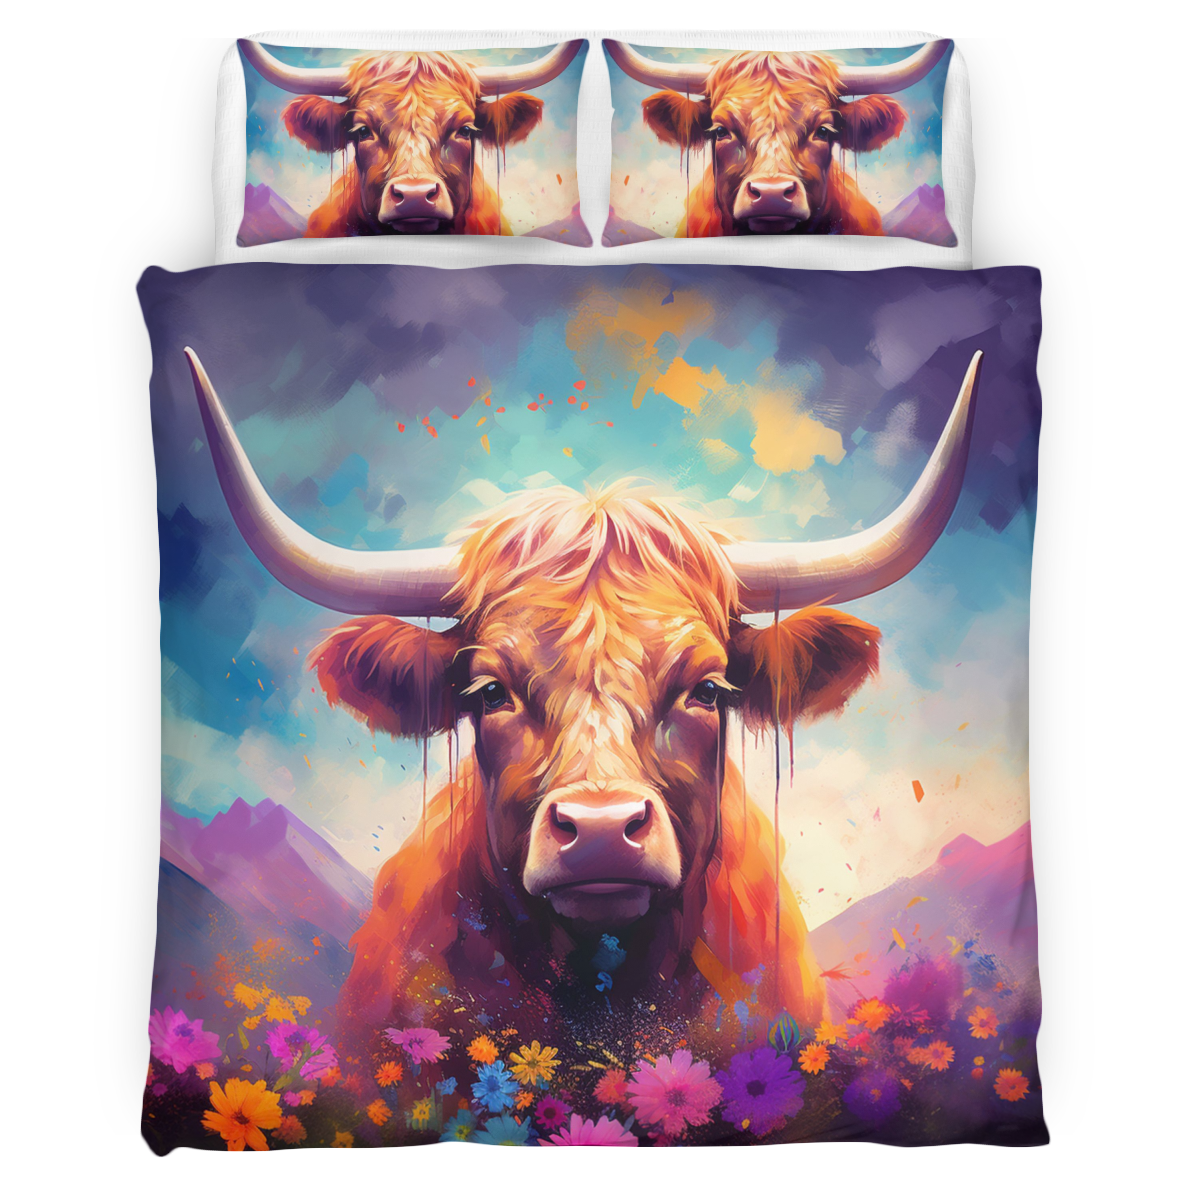 Highland Cow Bedding Set